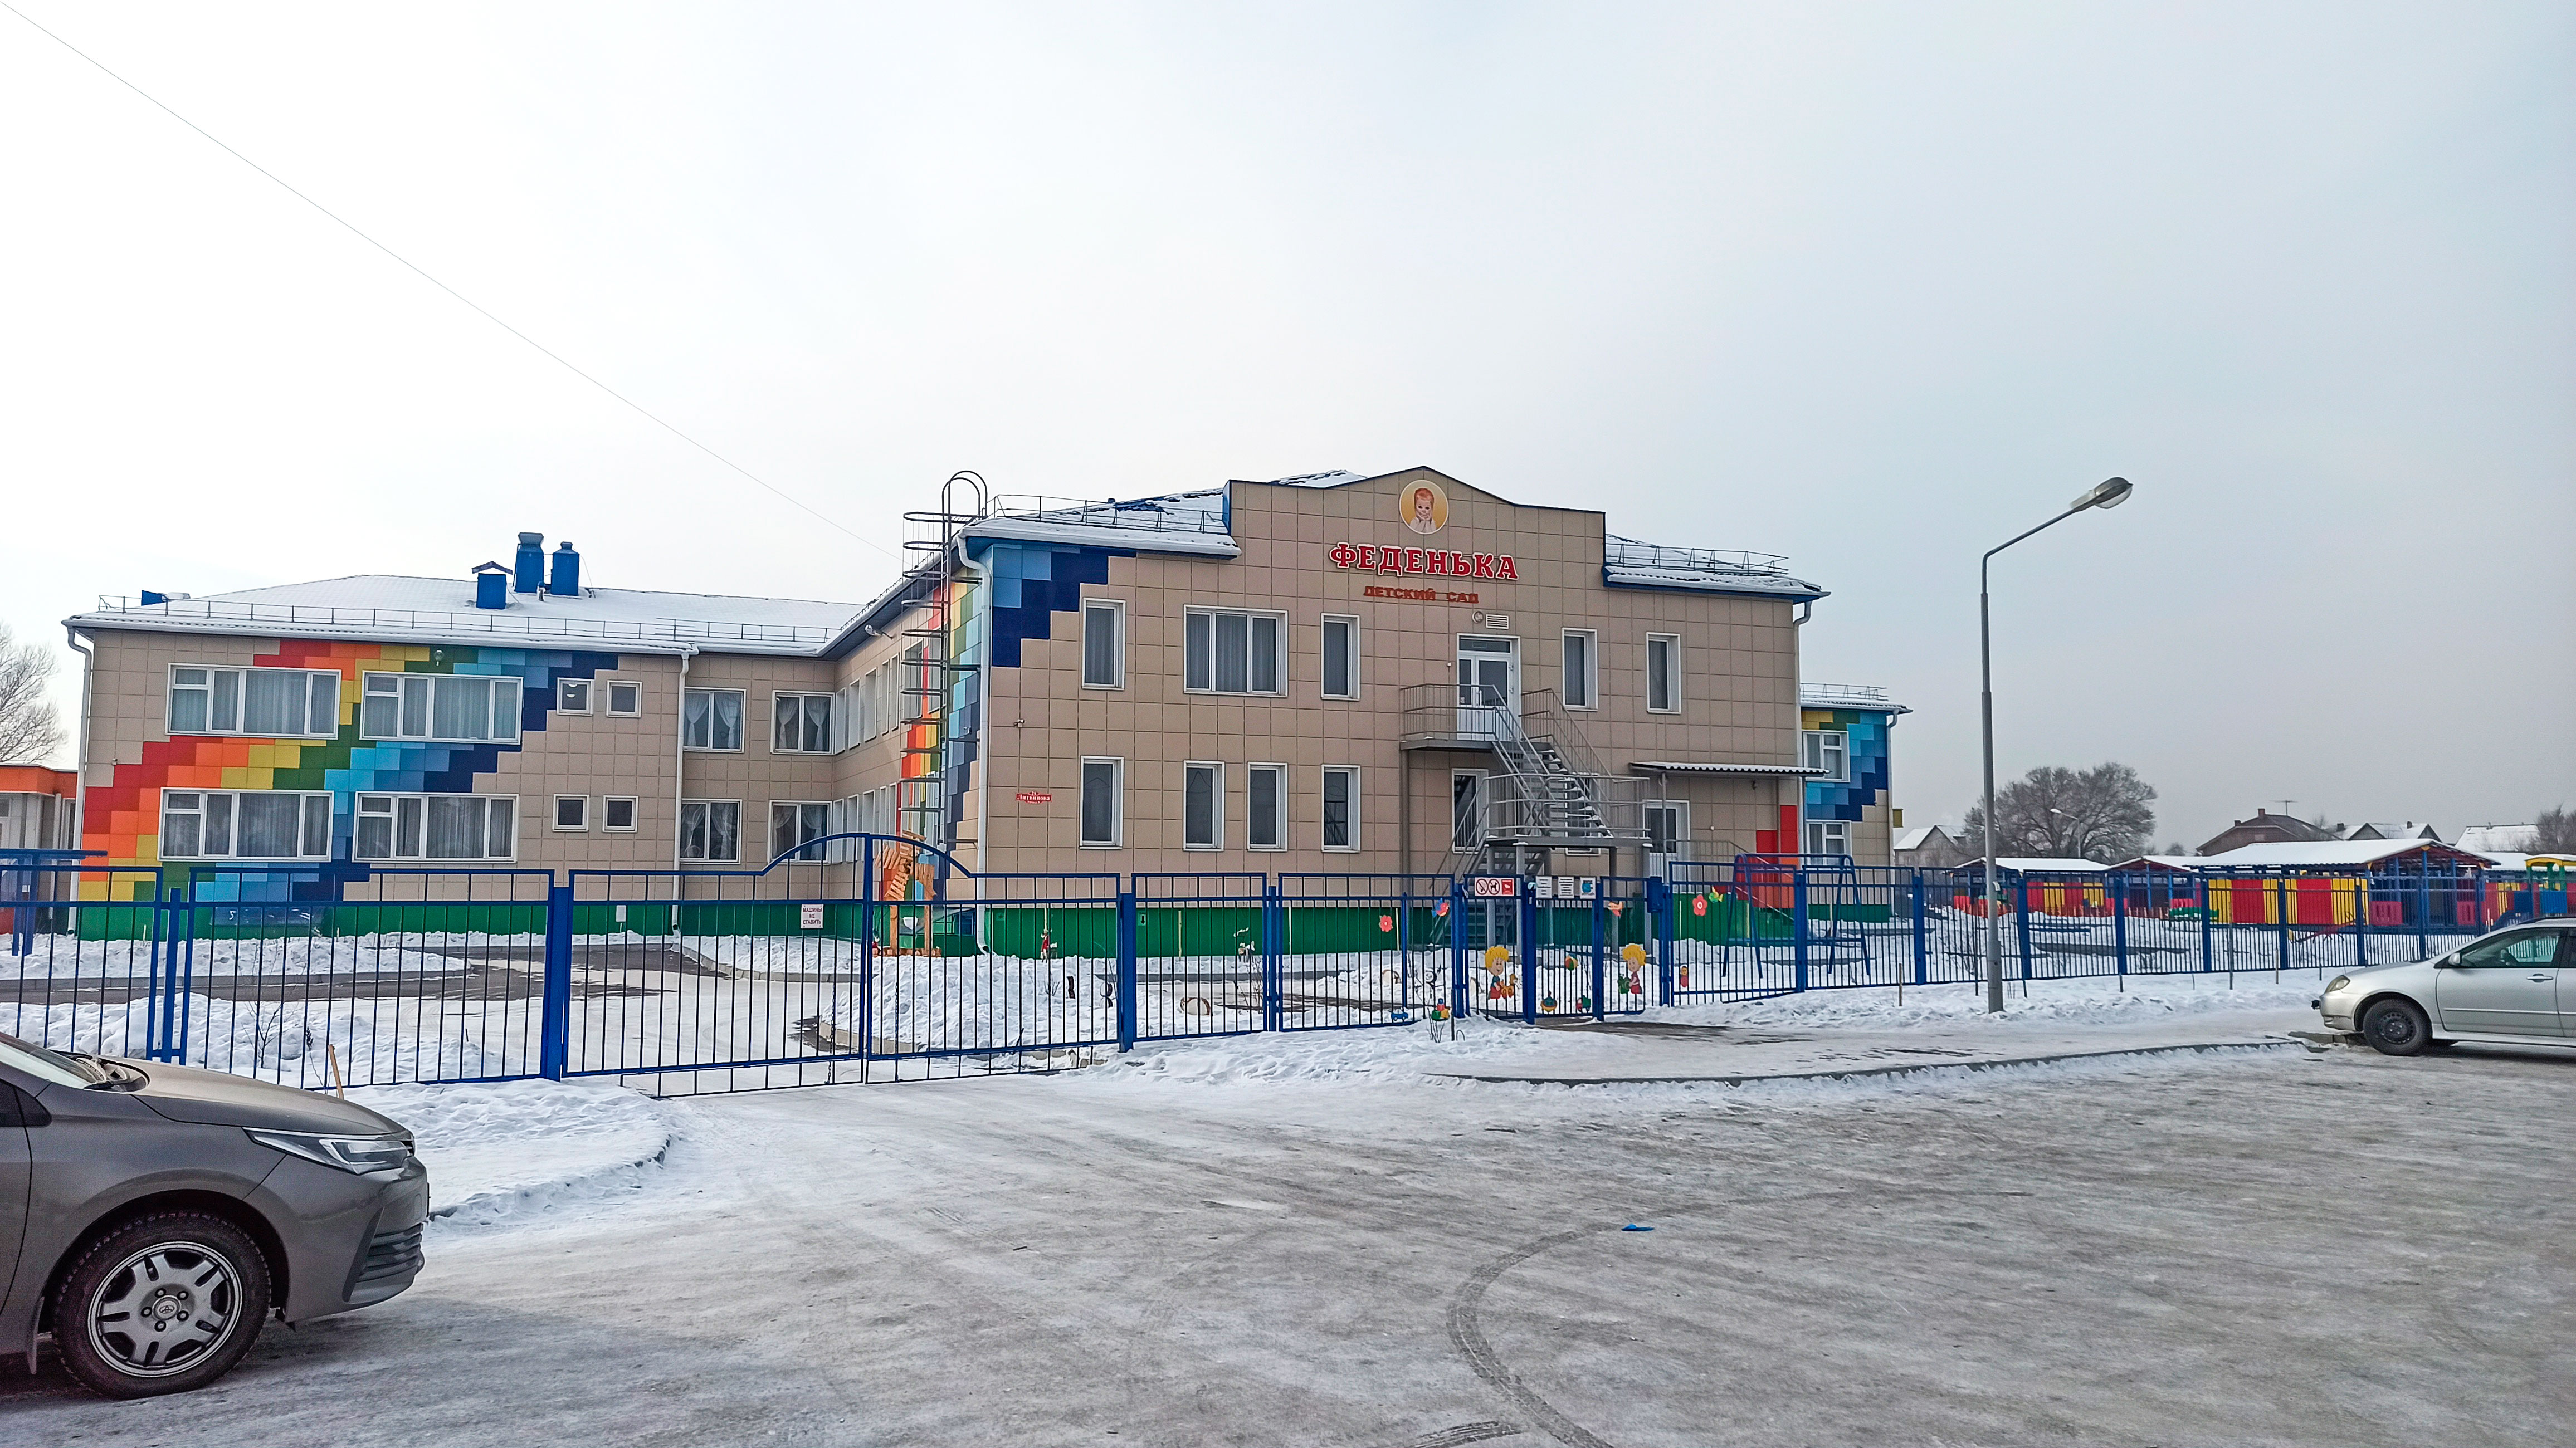 Фасад детского сада "Феденька" в г. Абакан.